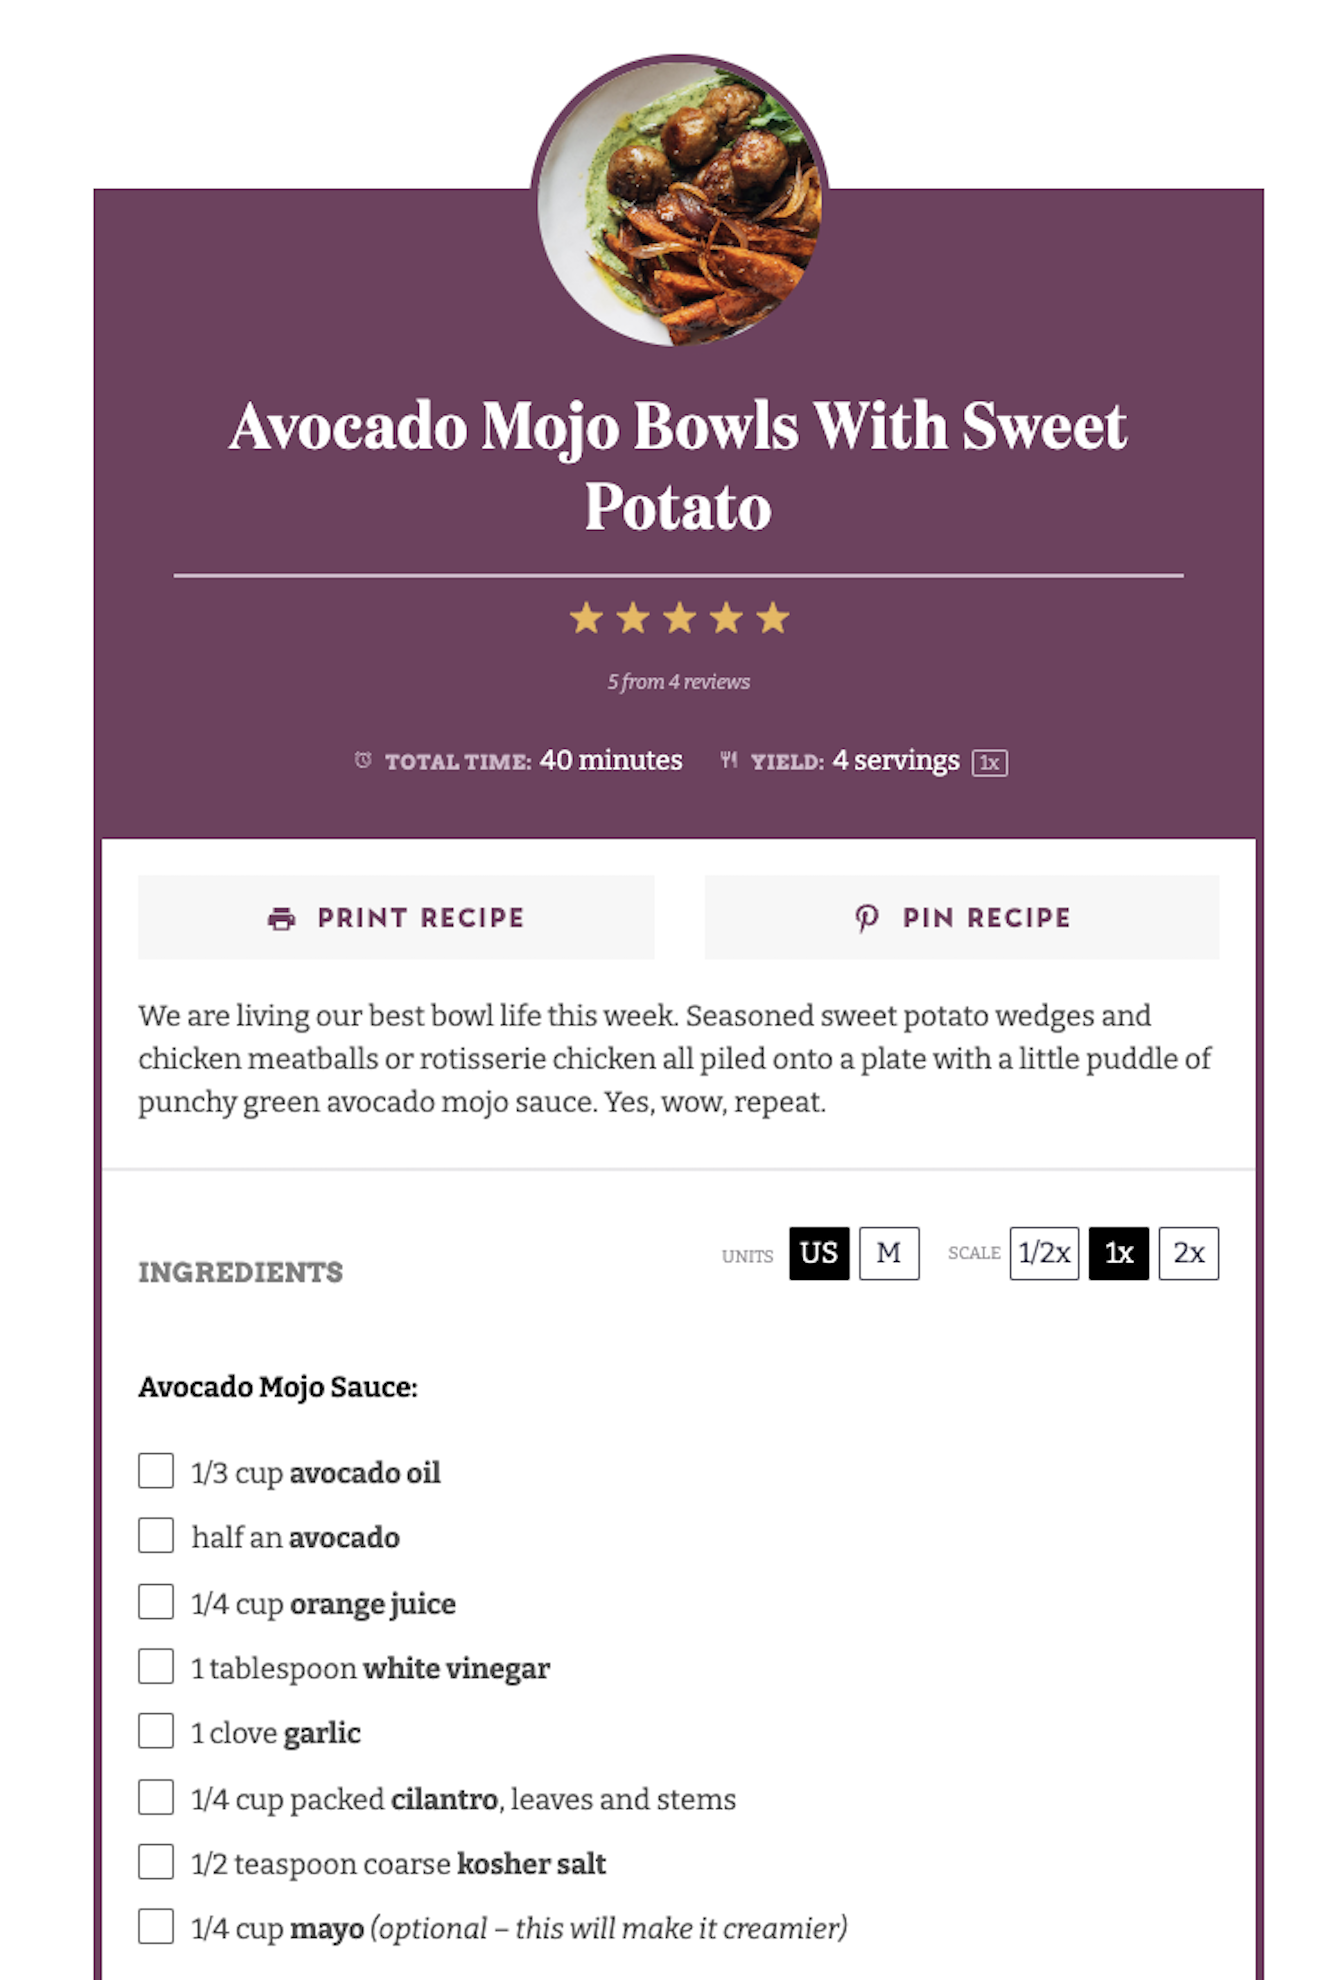 The Tasty Recipes recipe card for Avocado Mojo Bowls With Sweet Potato on Pinch of Yum.